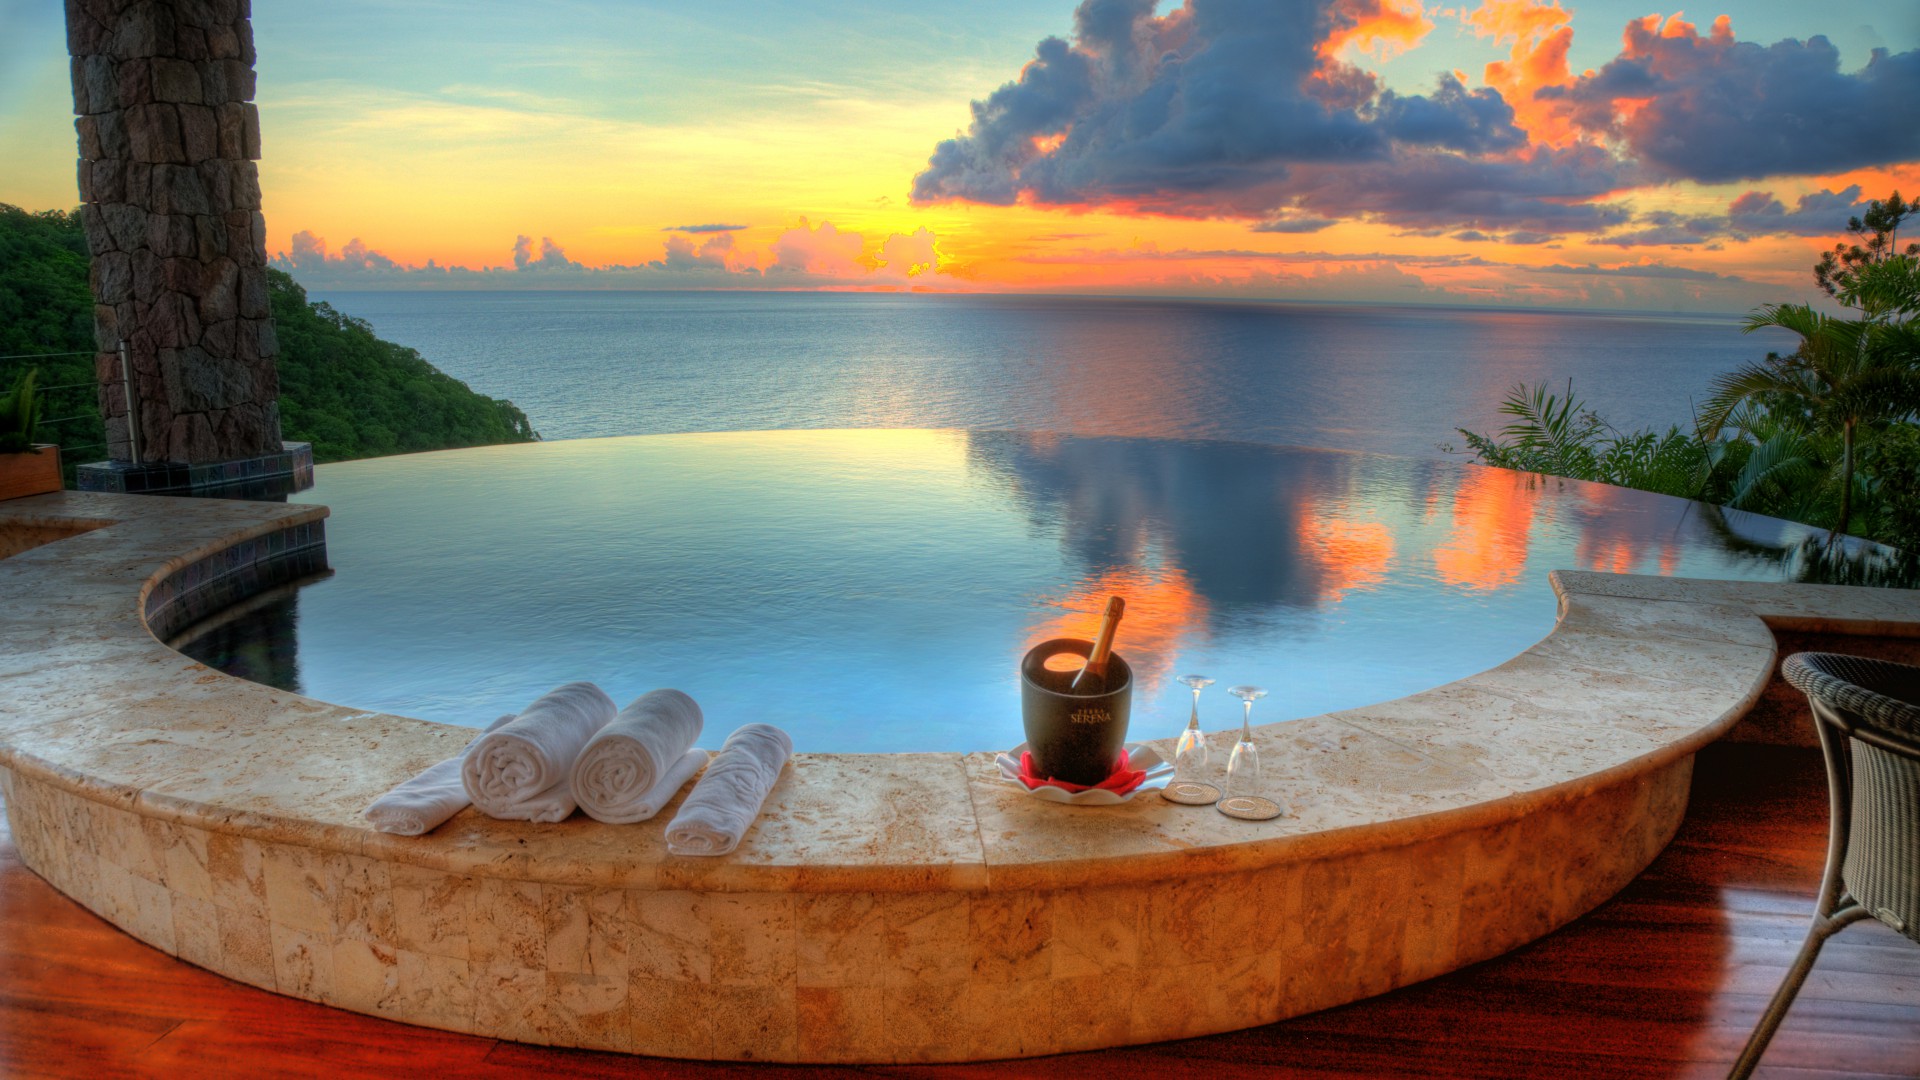 Jade Mountain Resort, Saint Lucia, The best hotel pools 2017, tourism, travel, resort, vacation, pool, ocean, sunset, sunrise, sky, clouds (horizontal)